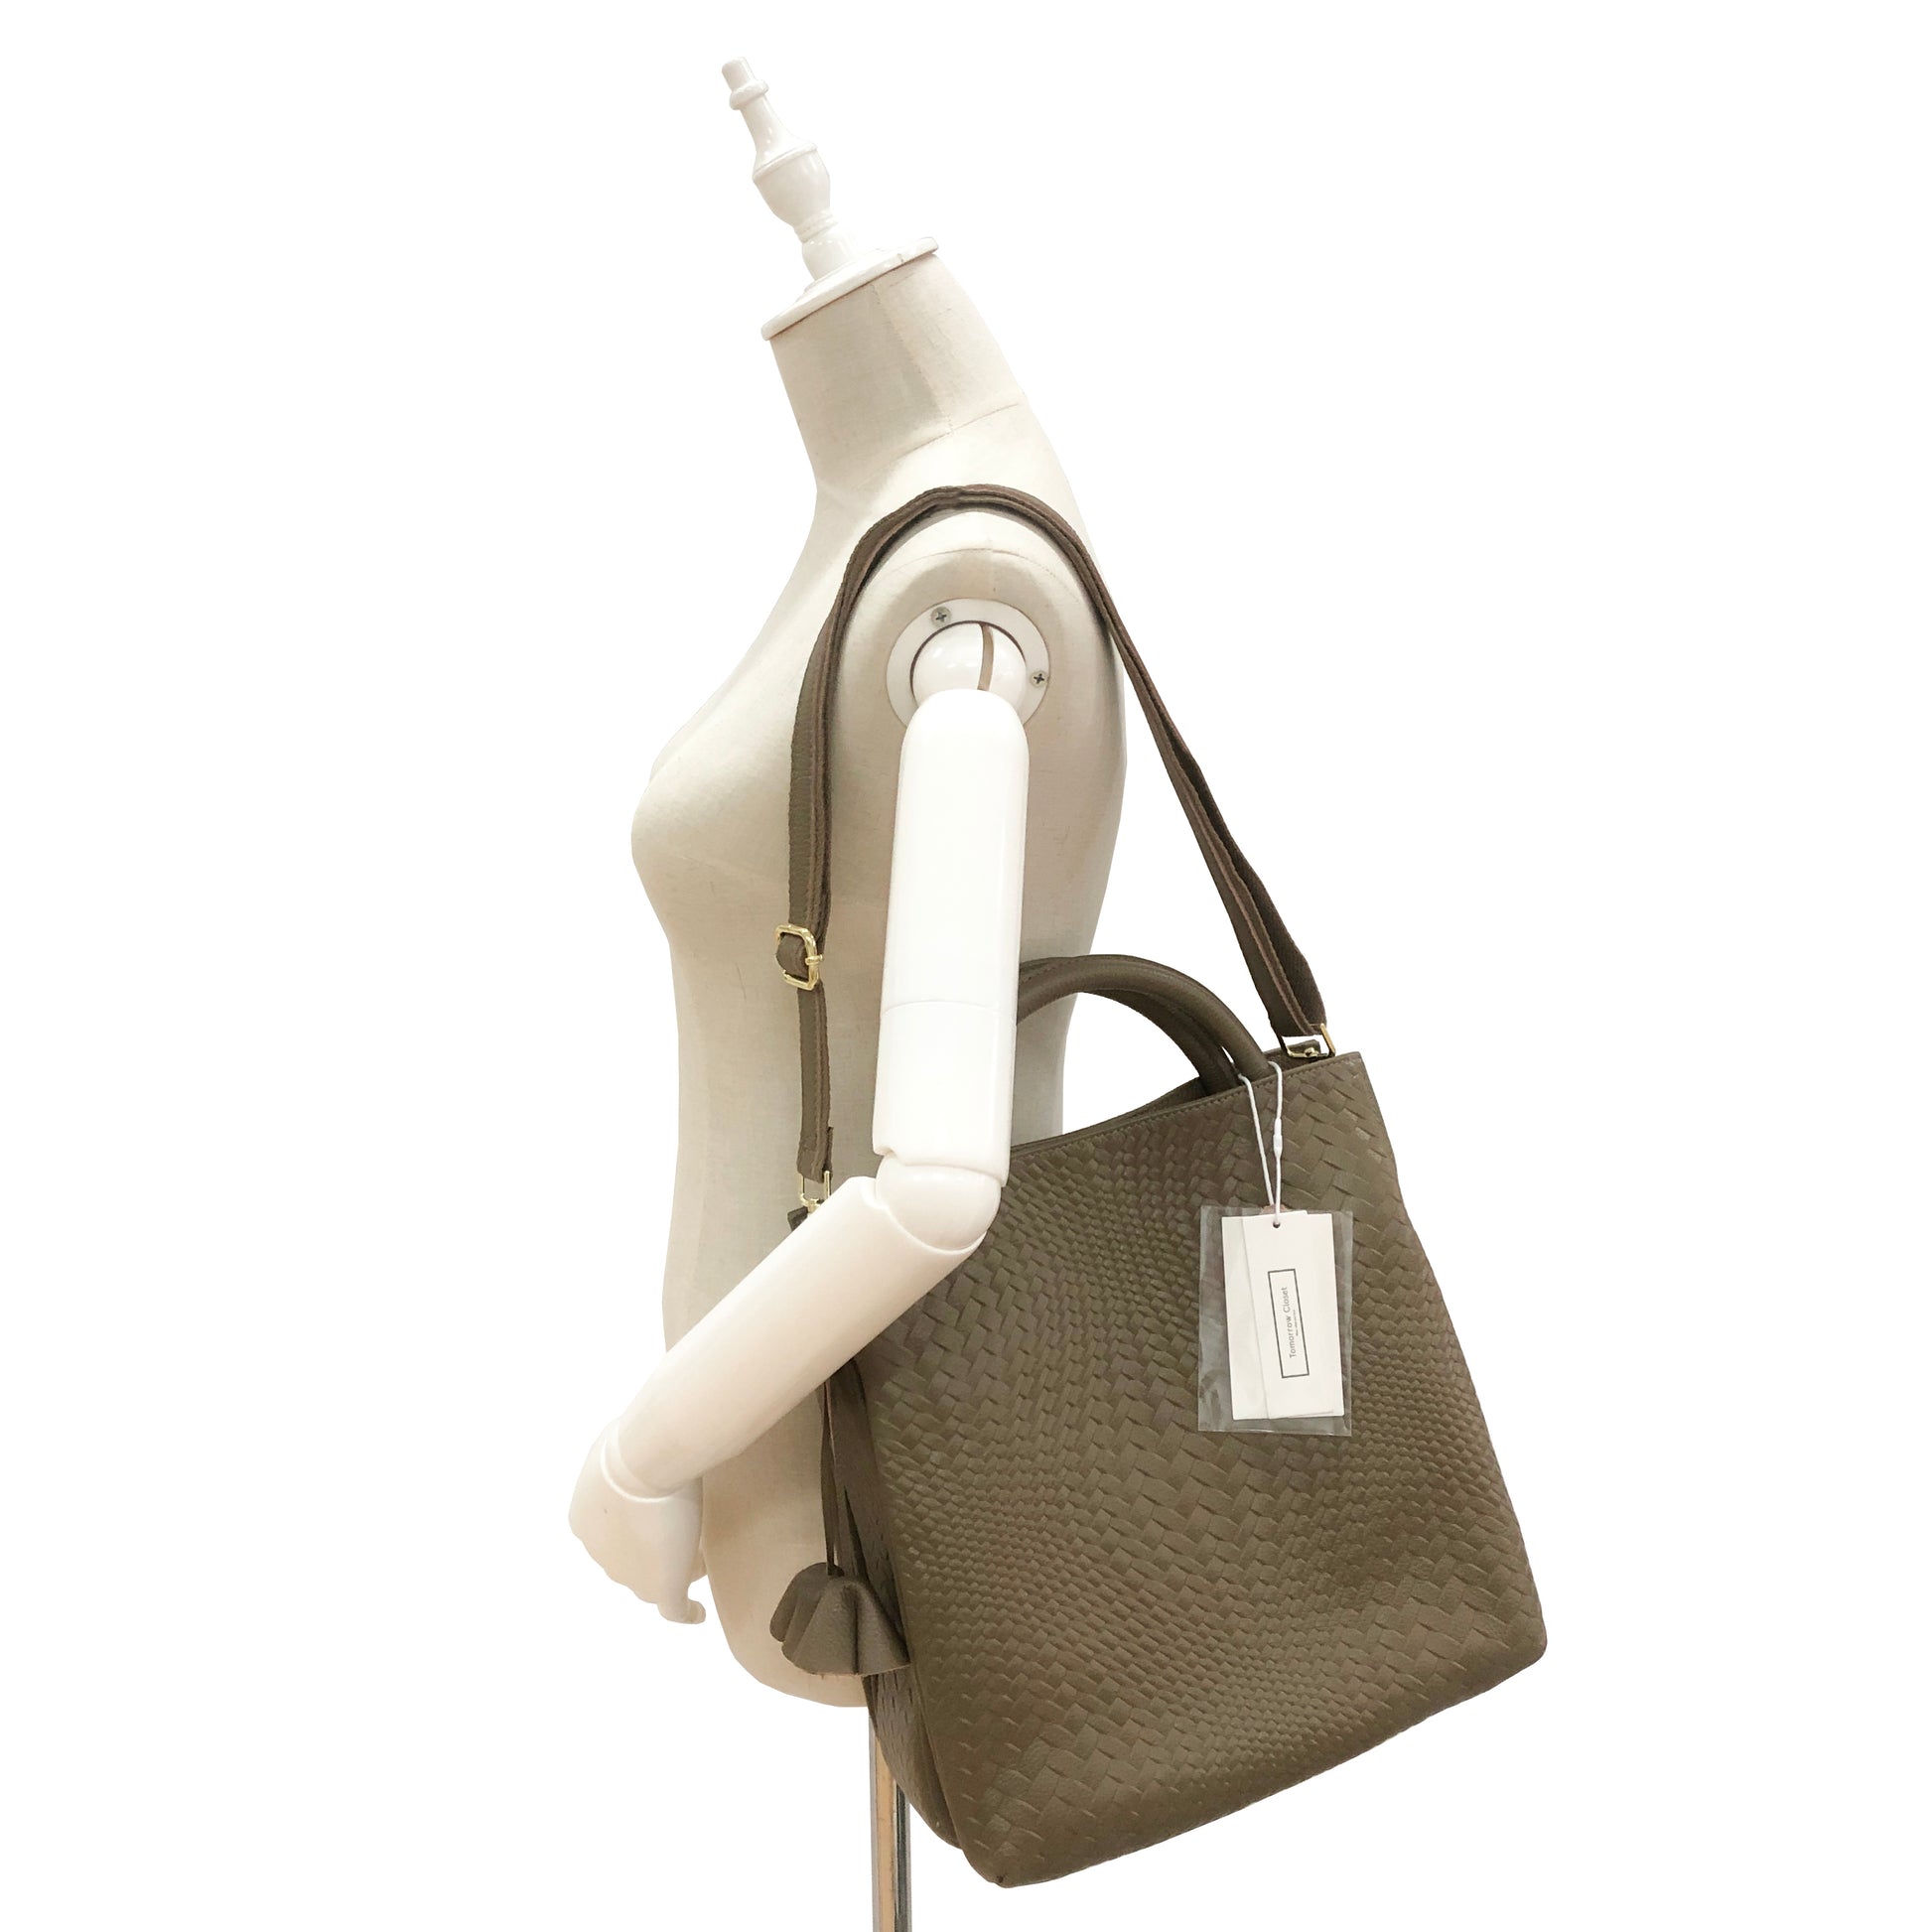 Women's genuine cowhide leather handbag Kriz design with handwoven print by Tomorrow Closet